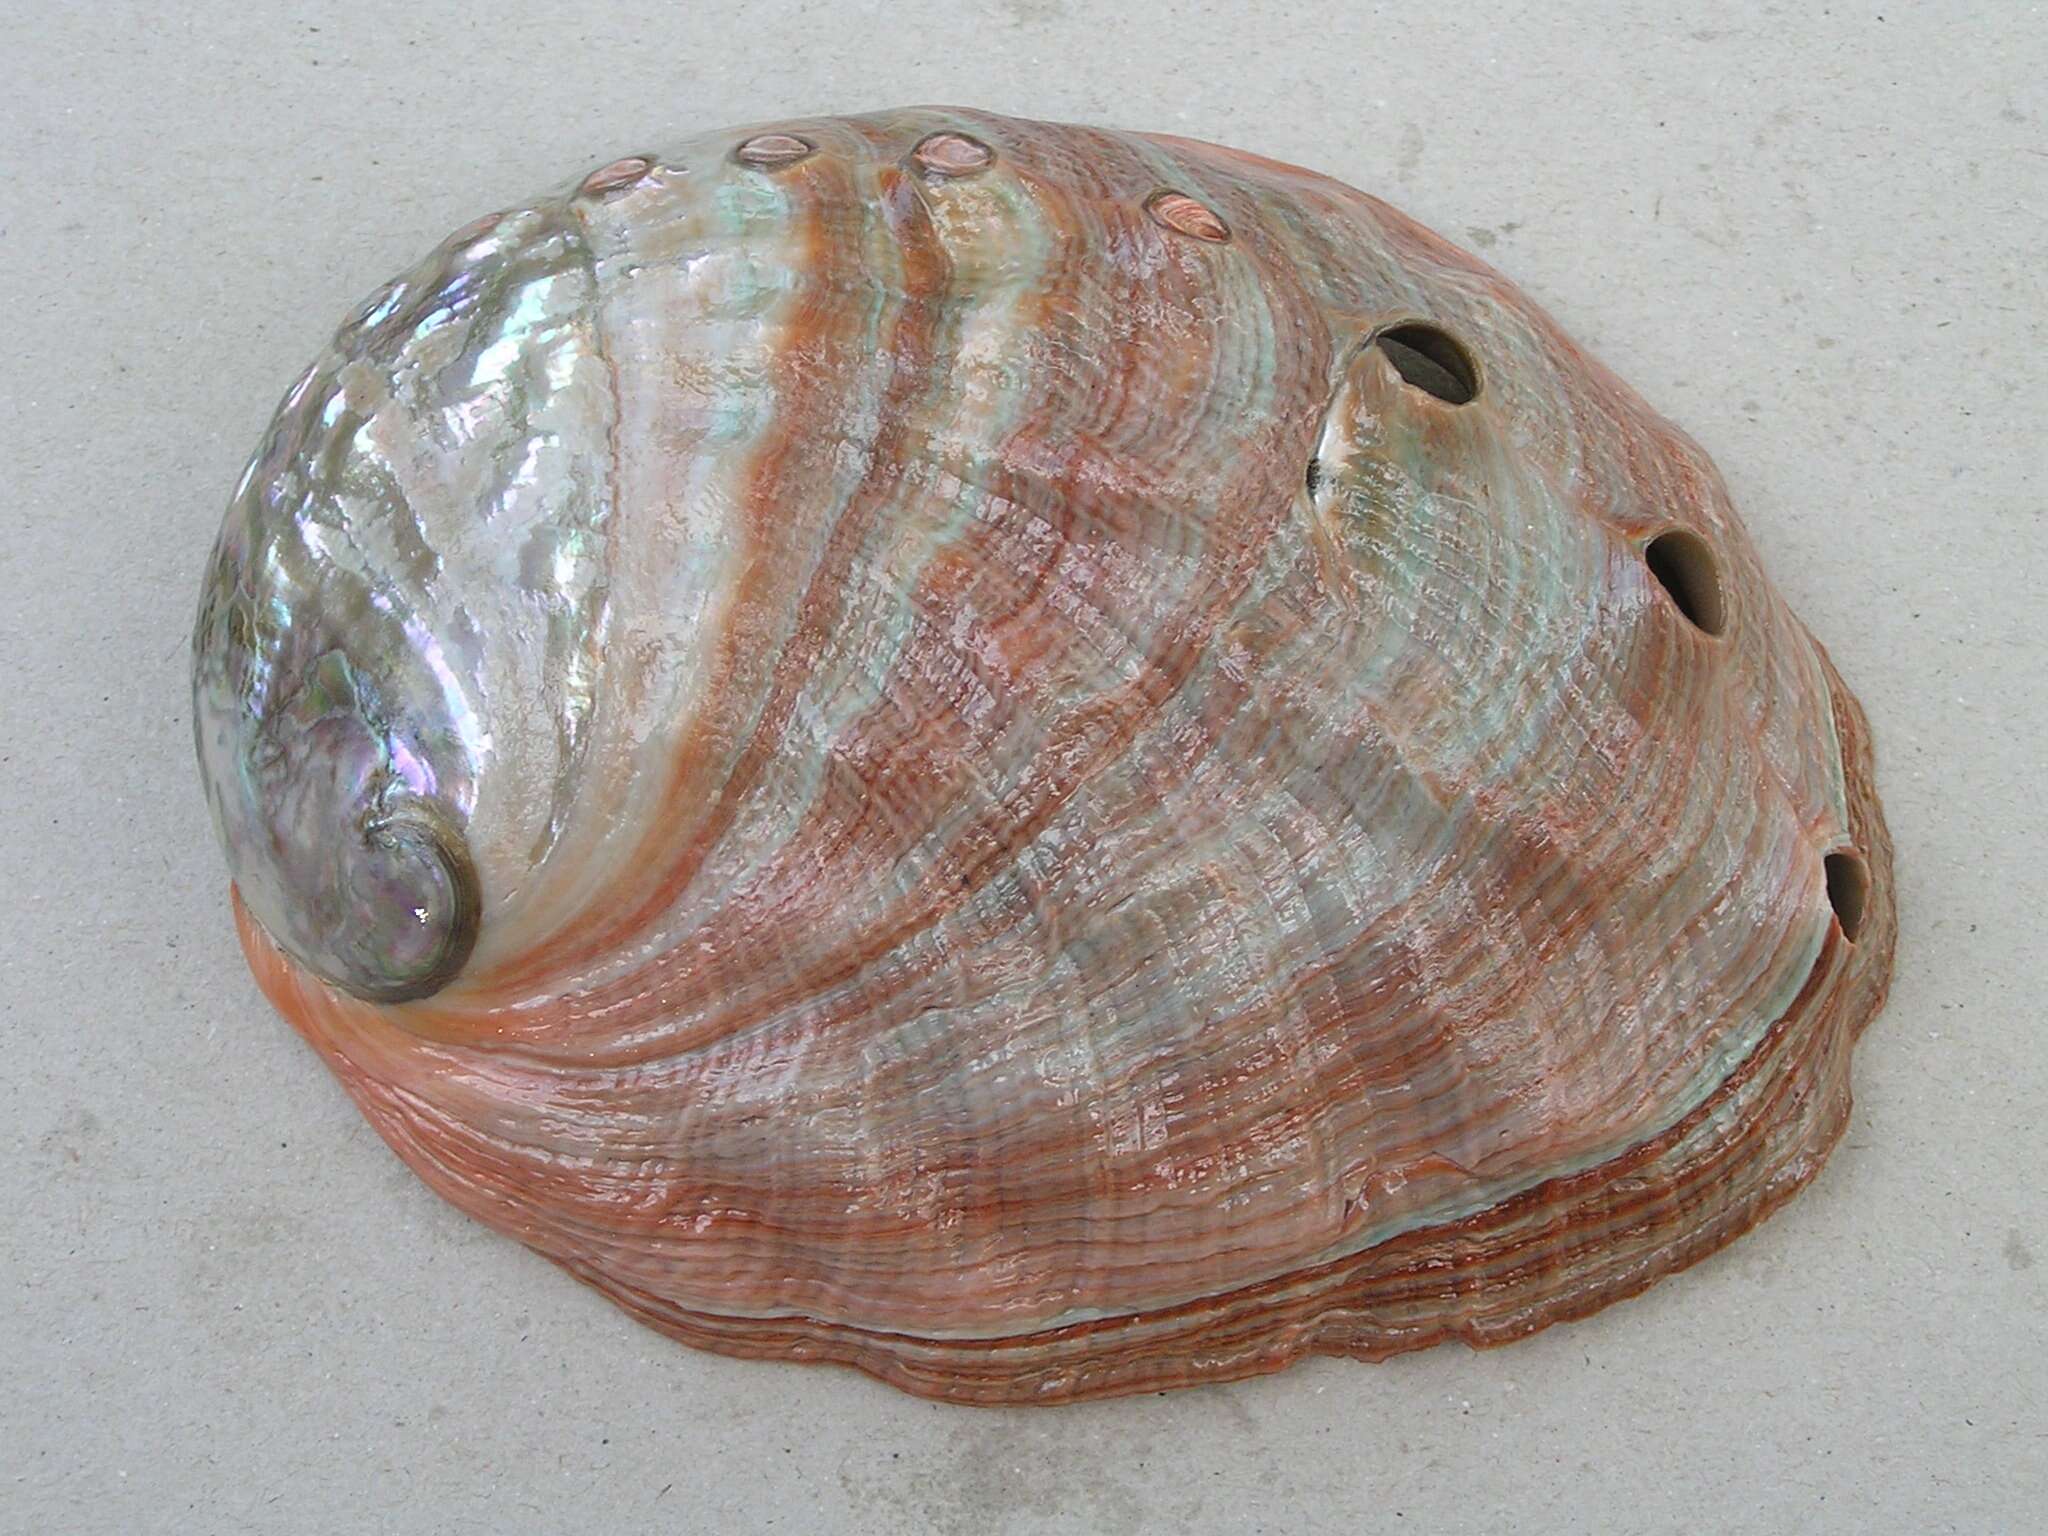 Image of pink abalone